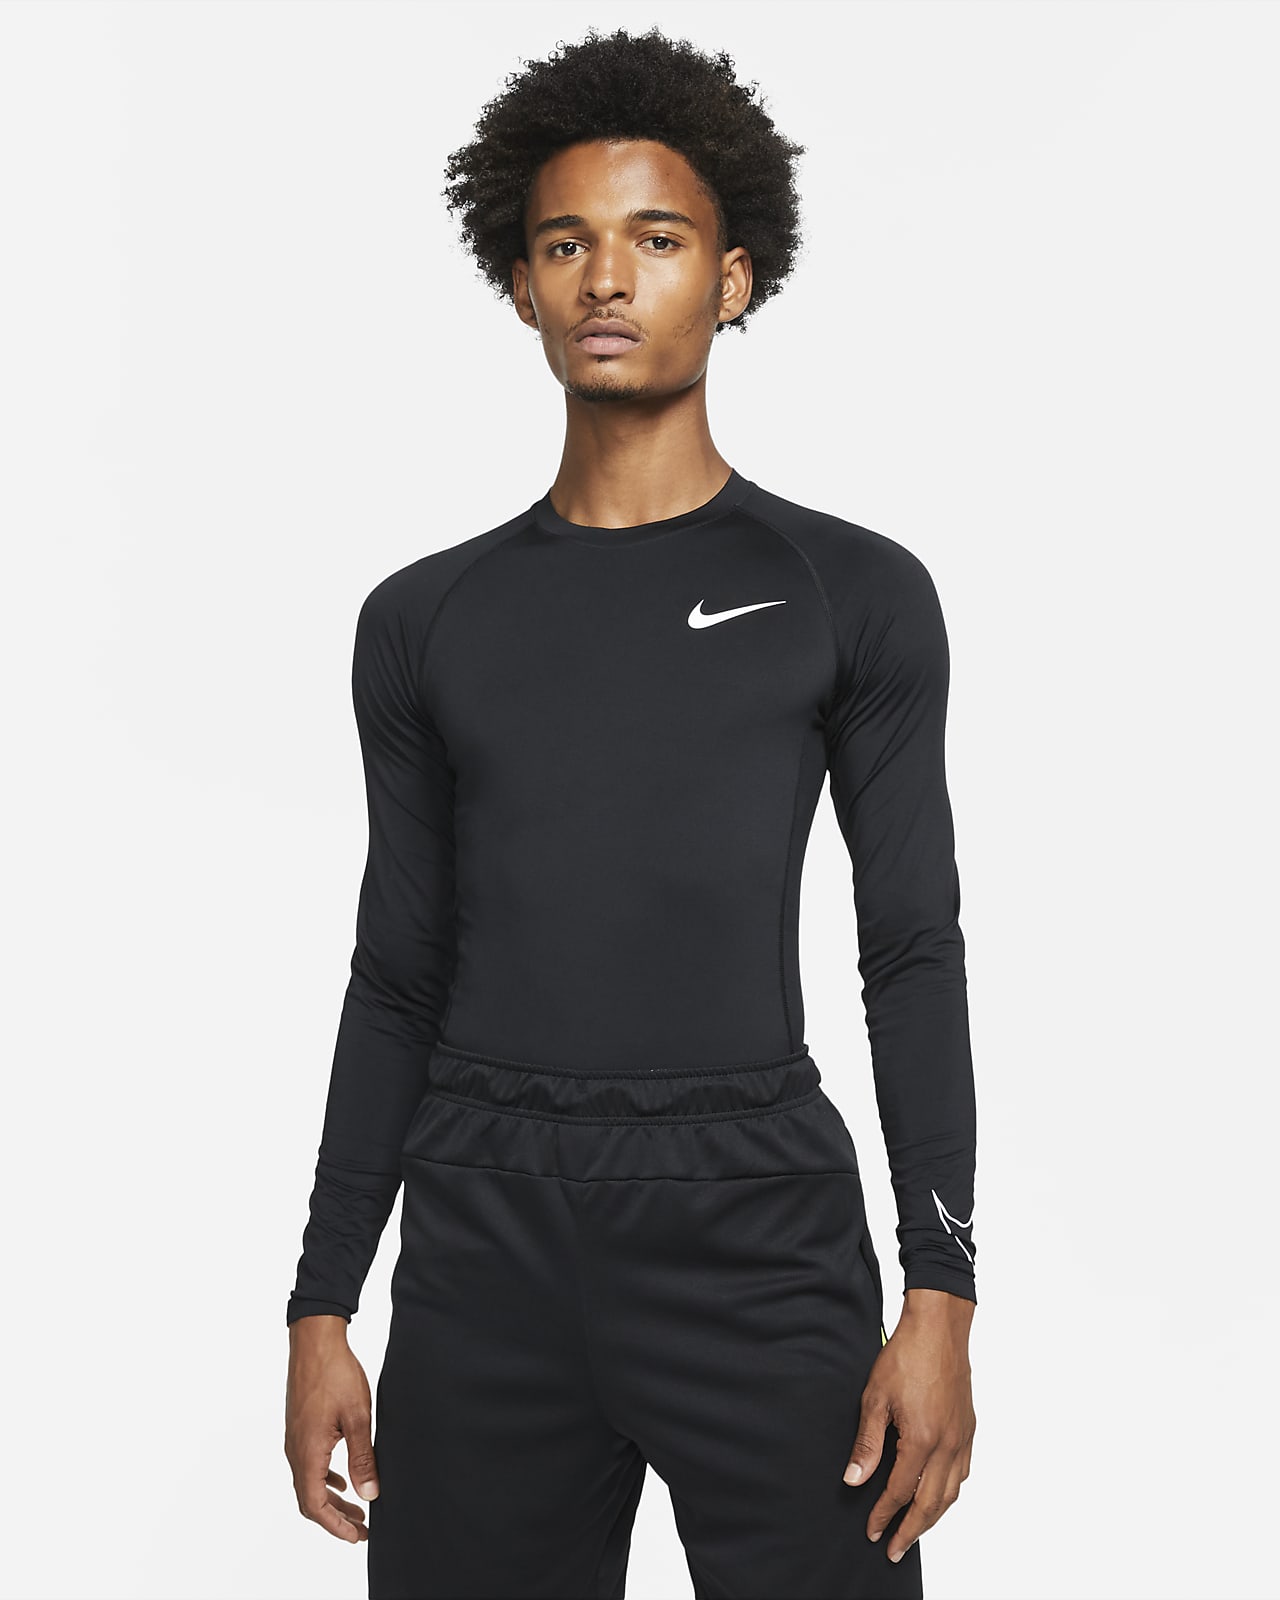 Time Humidity Flatter Nike Pro Dri-FIT Men's Tight Fit Long-Sleeve Top. Nike.com